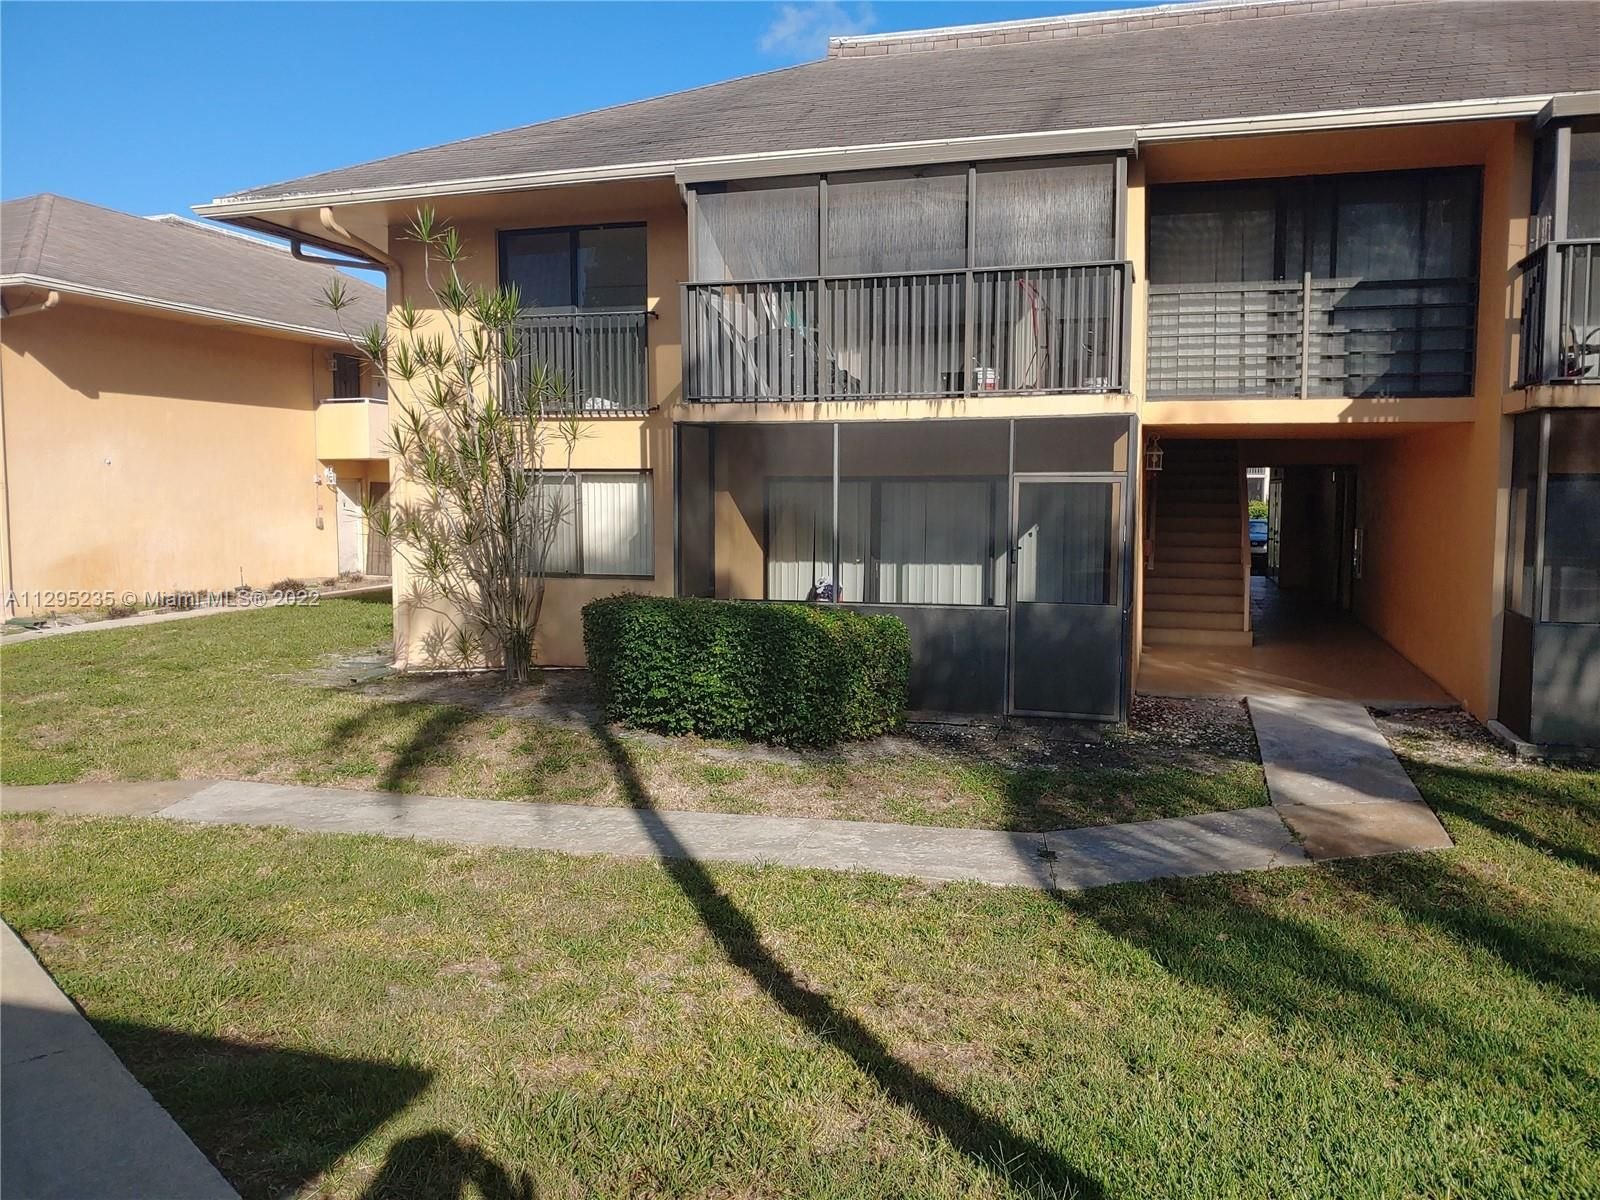 Real estate property located at 5805 Washington St #16, Broward County, Hollywood, FL